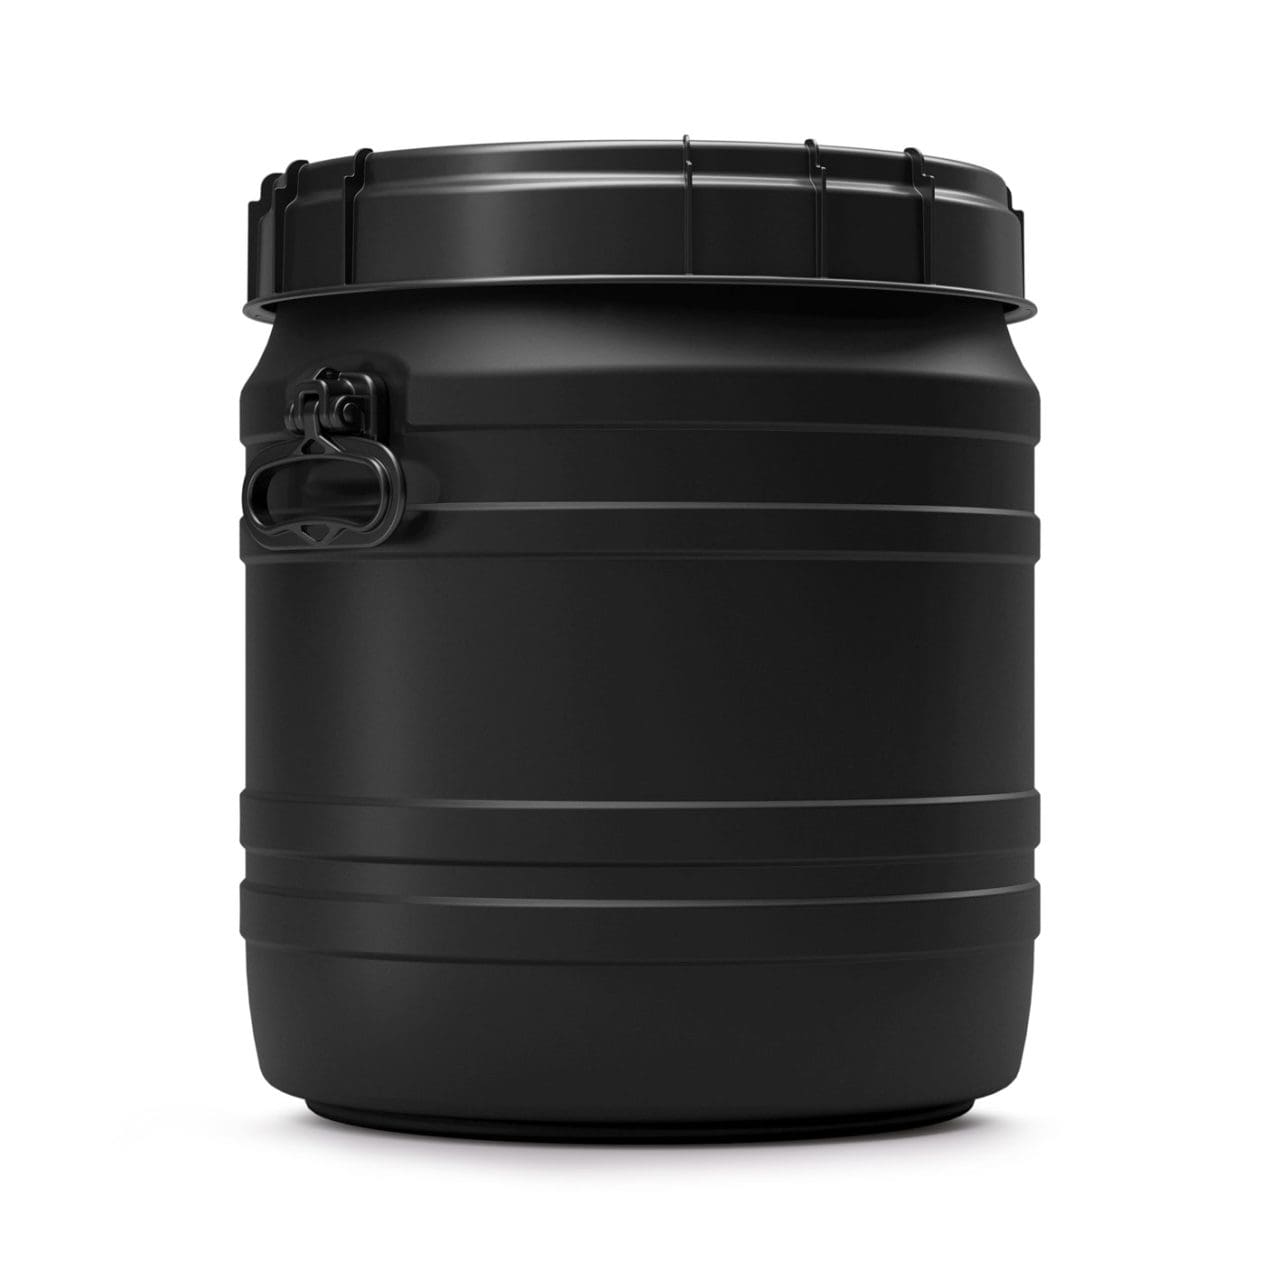 6942 UV safe drum with mounted handgrips 55 liter